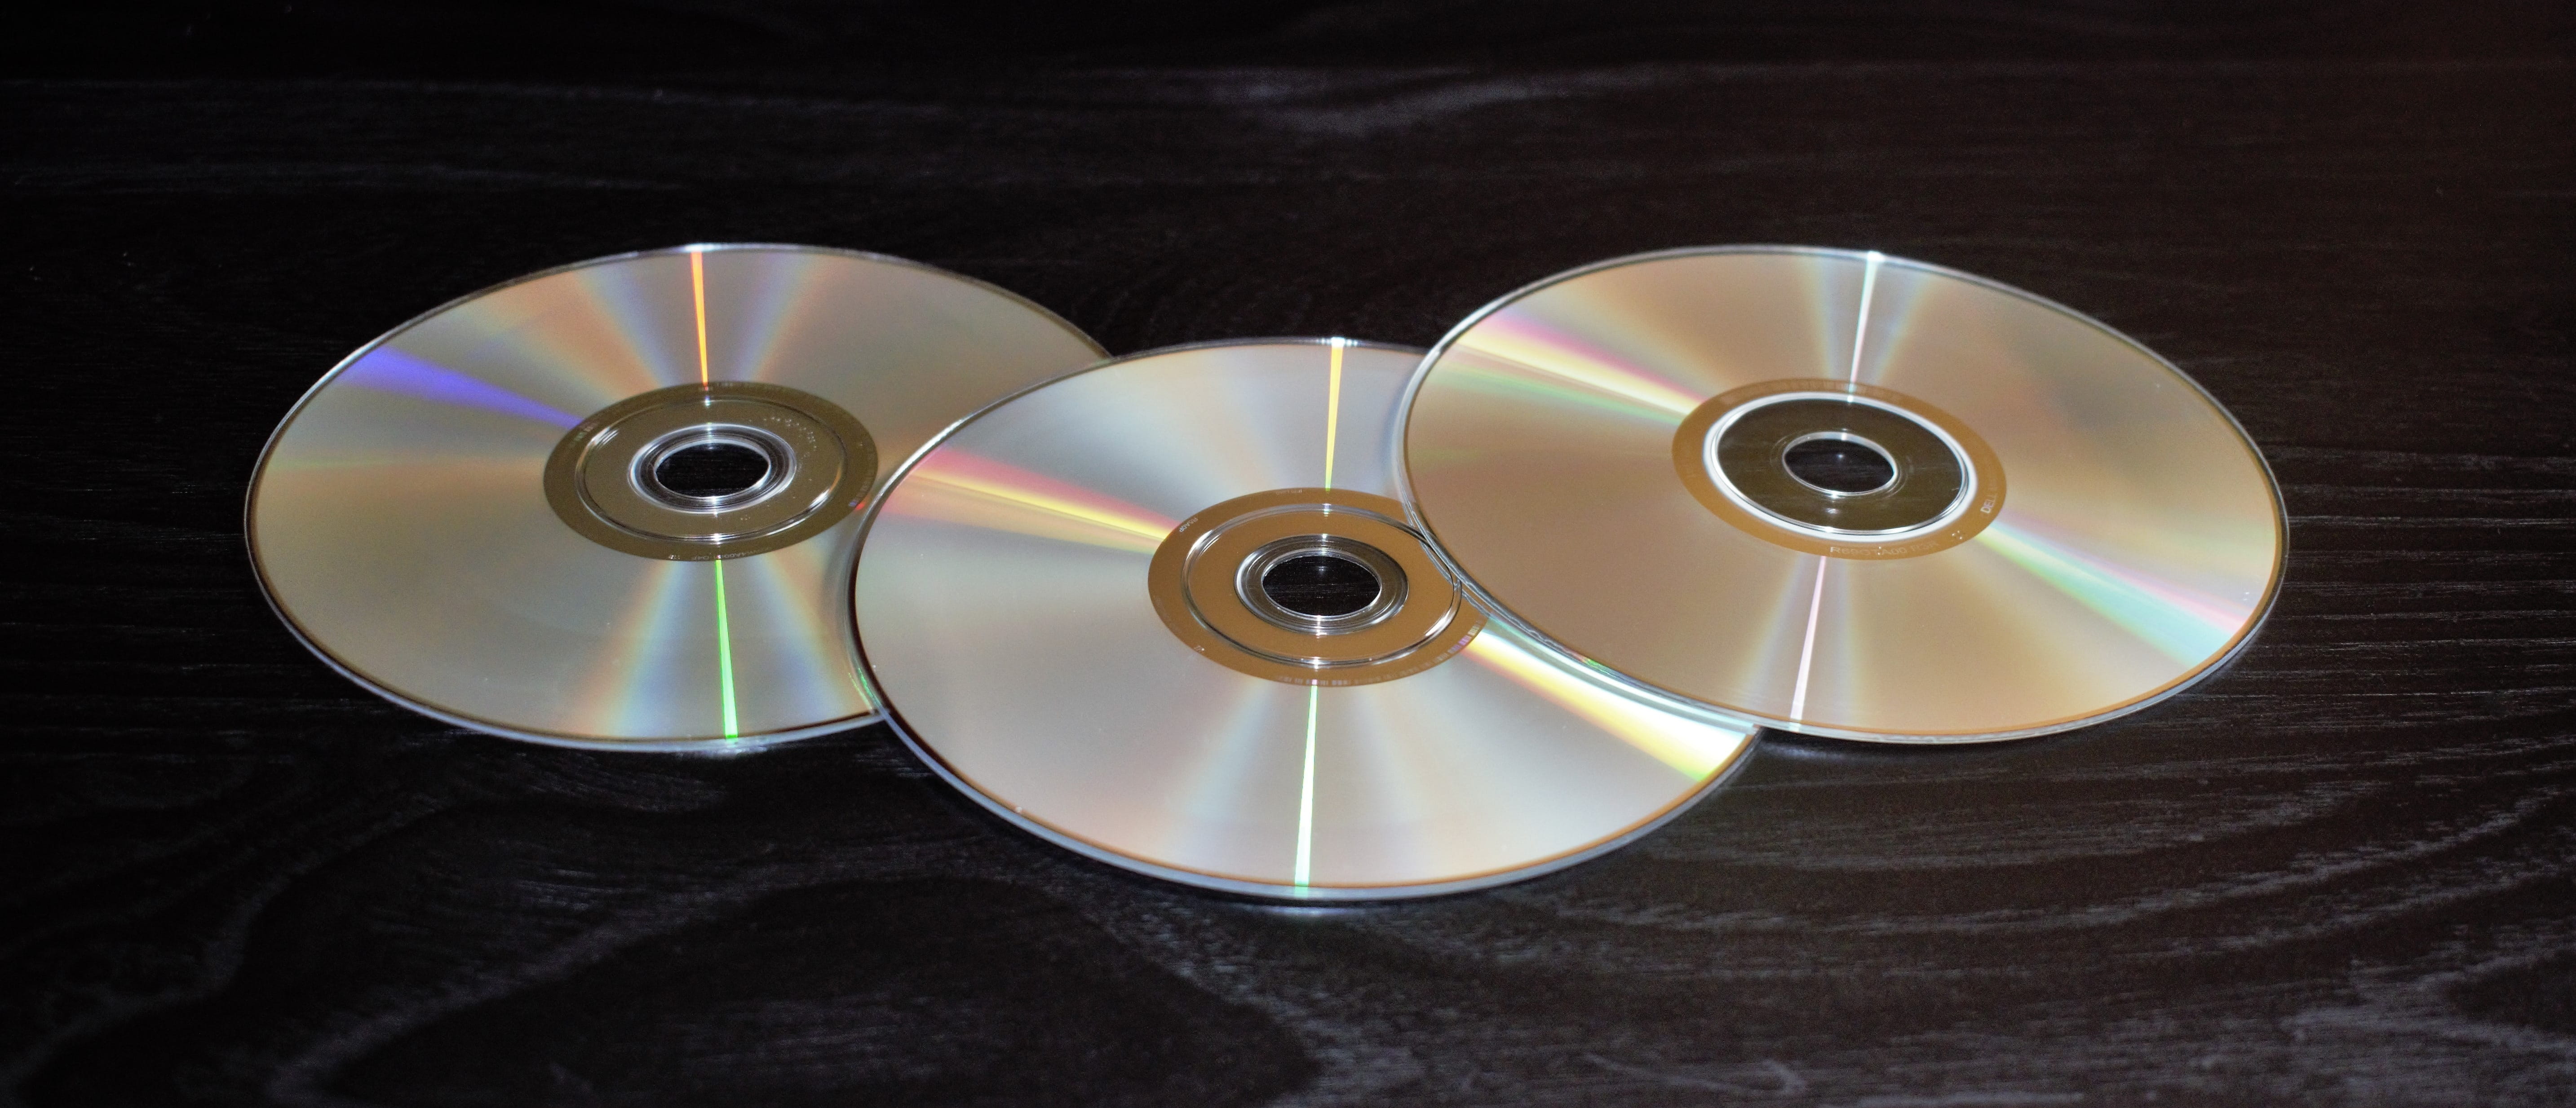 Discs, Cd, Dvd, Software, Digital, cd-rom, dvd-rom, blu-ray